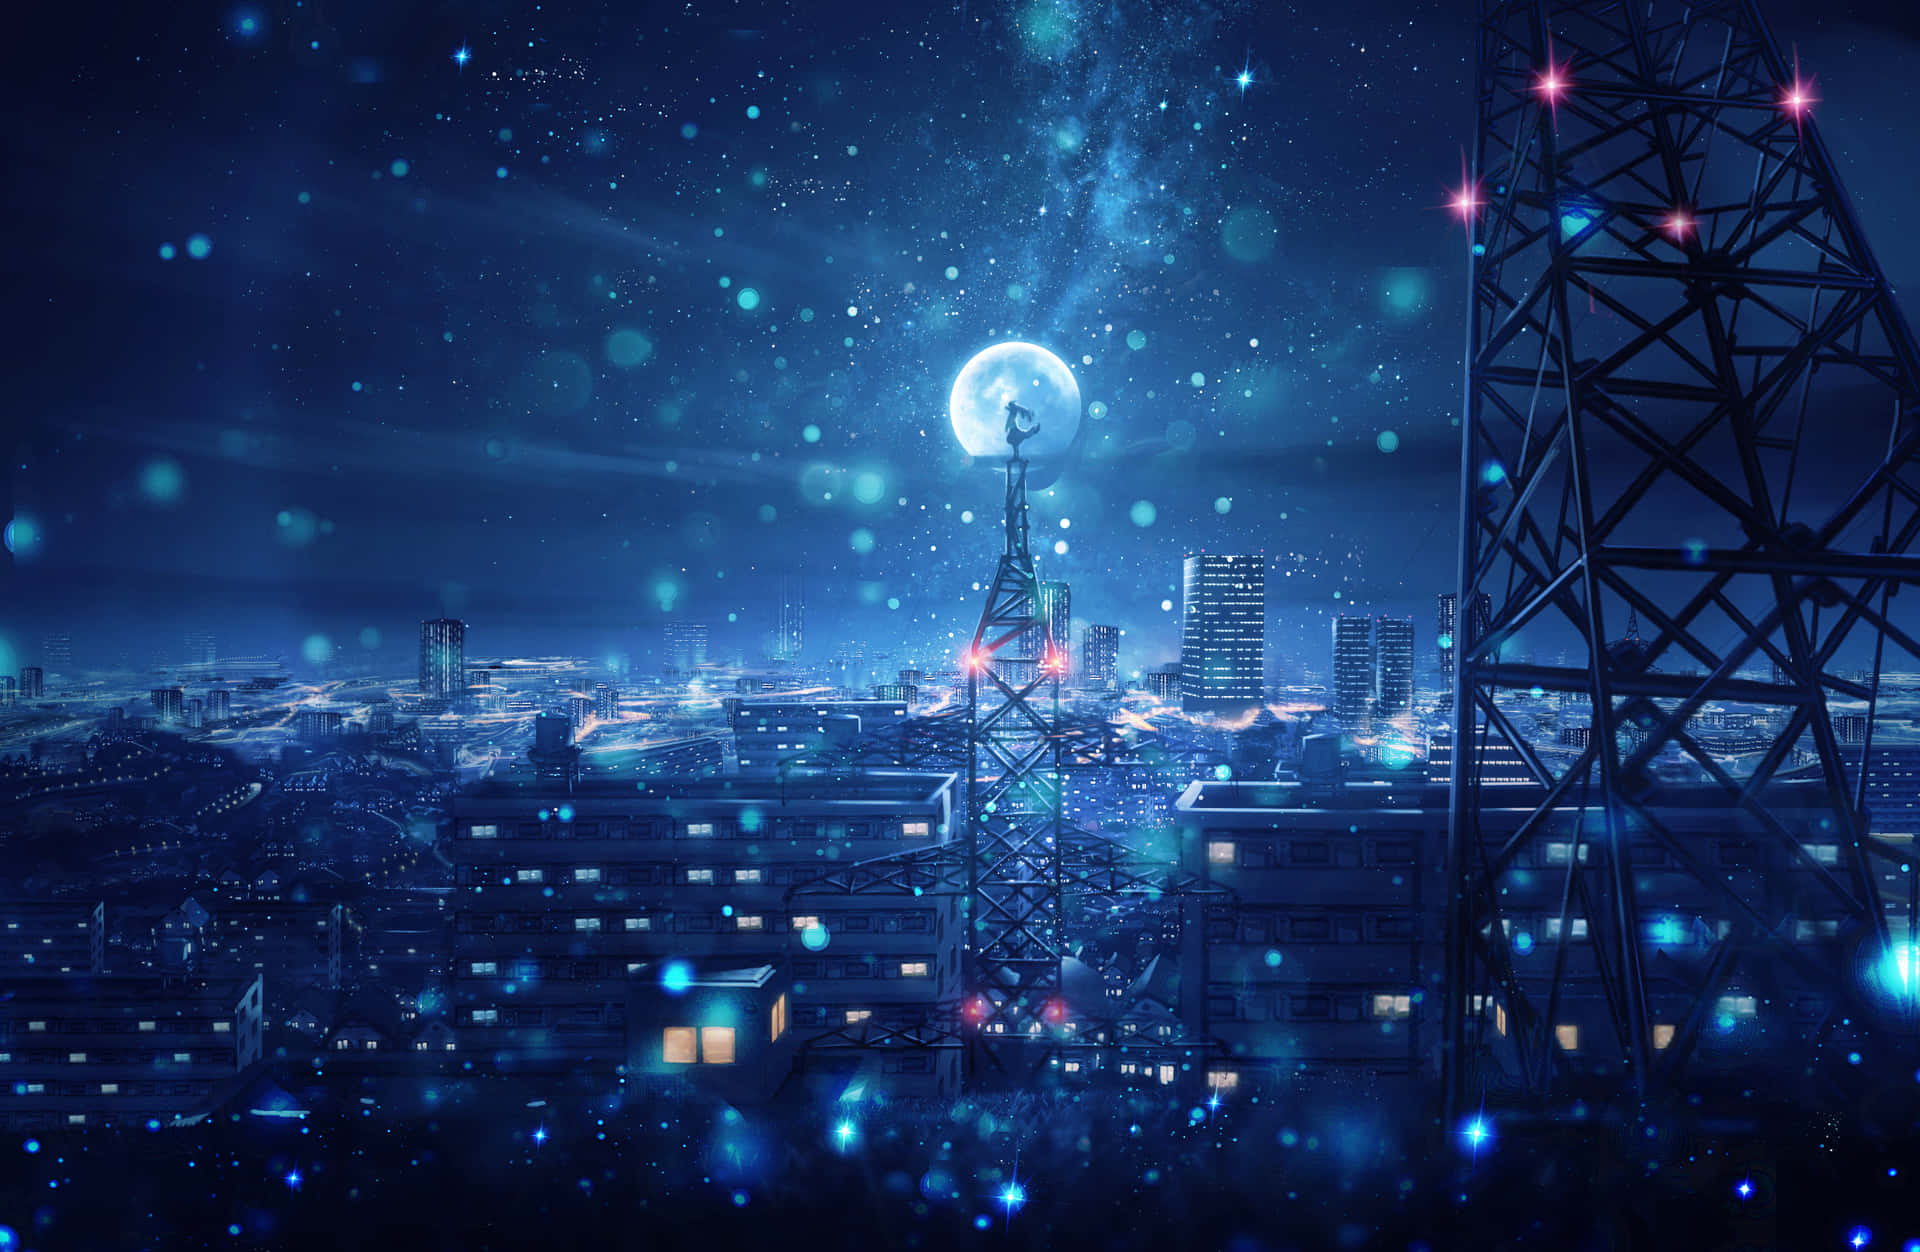 Aesthetic Anime City Skyline at Night